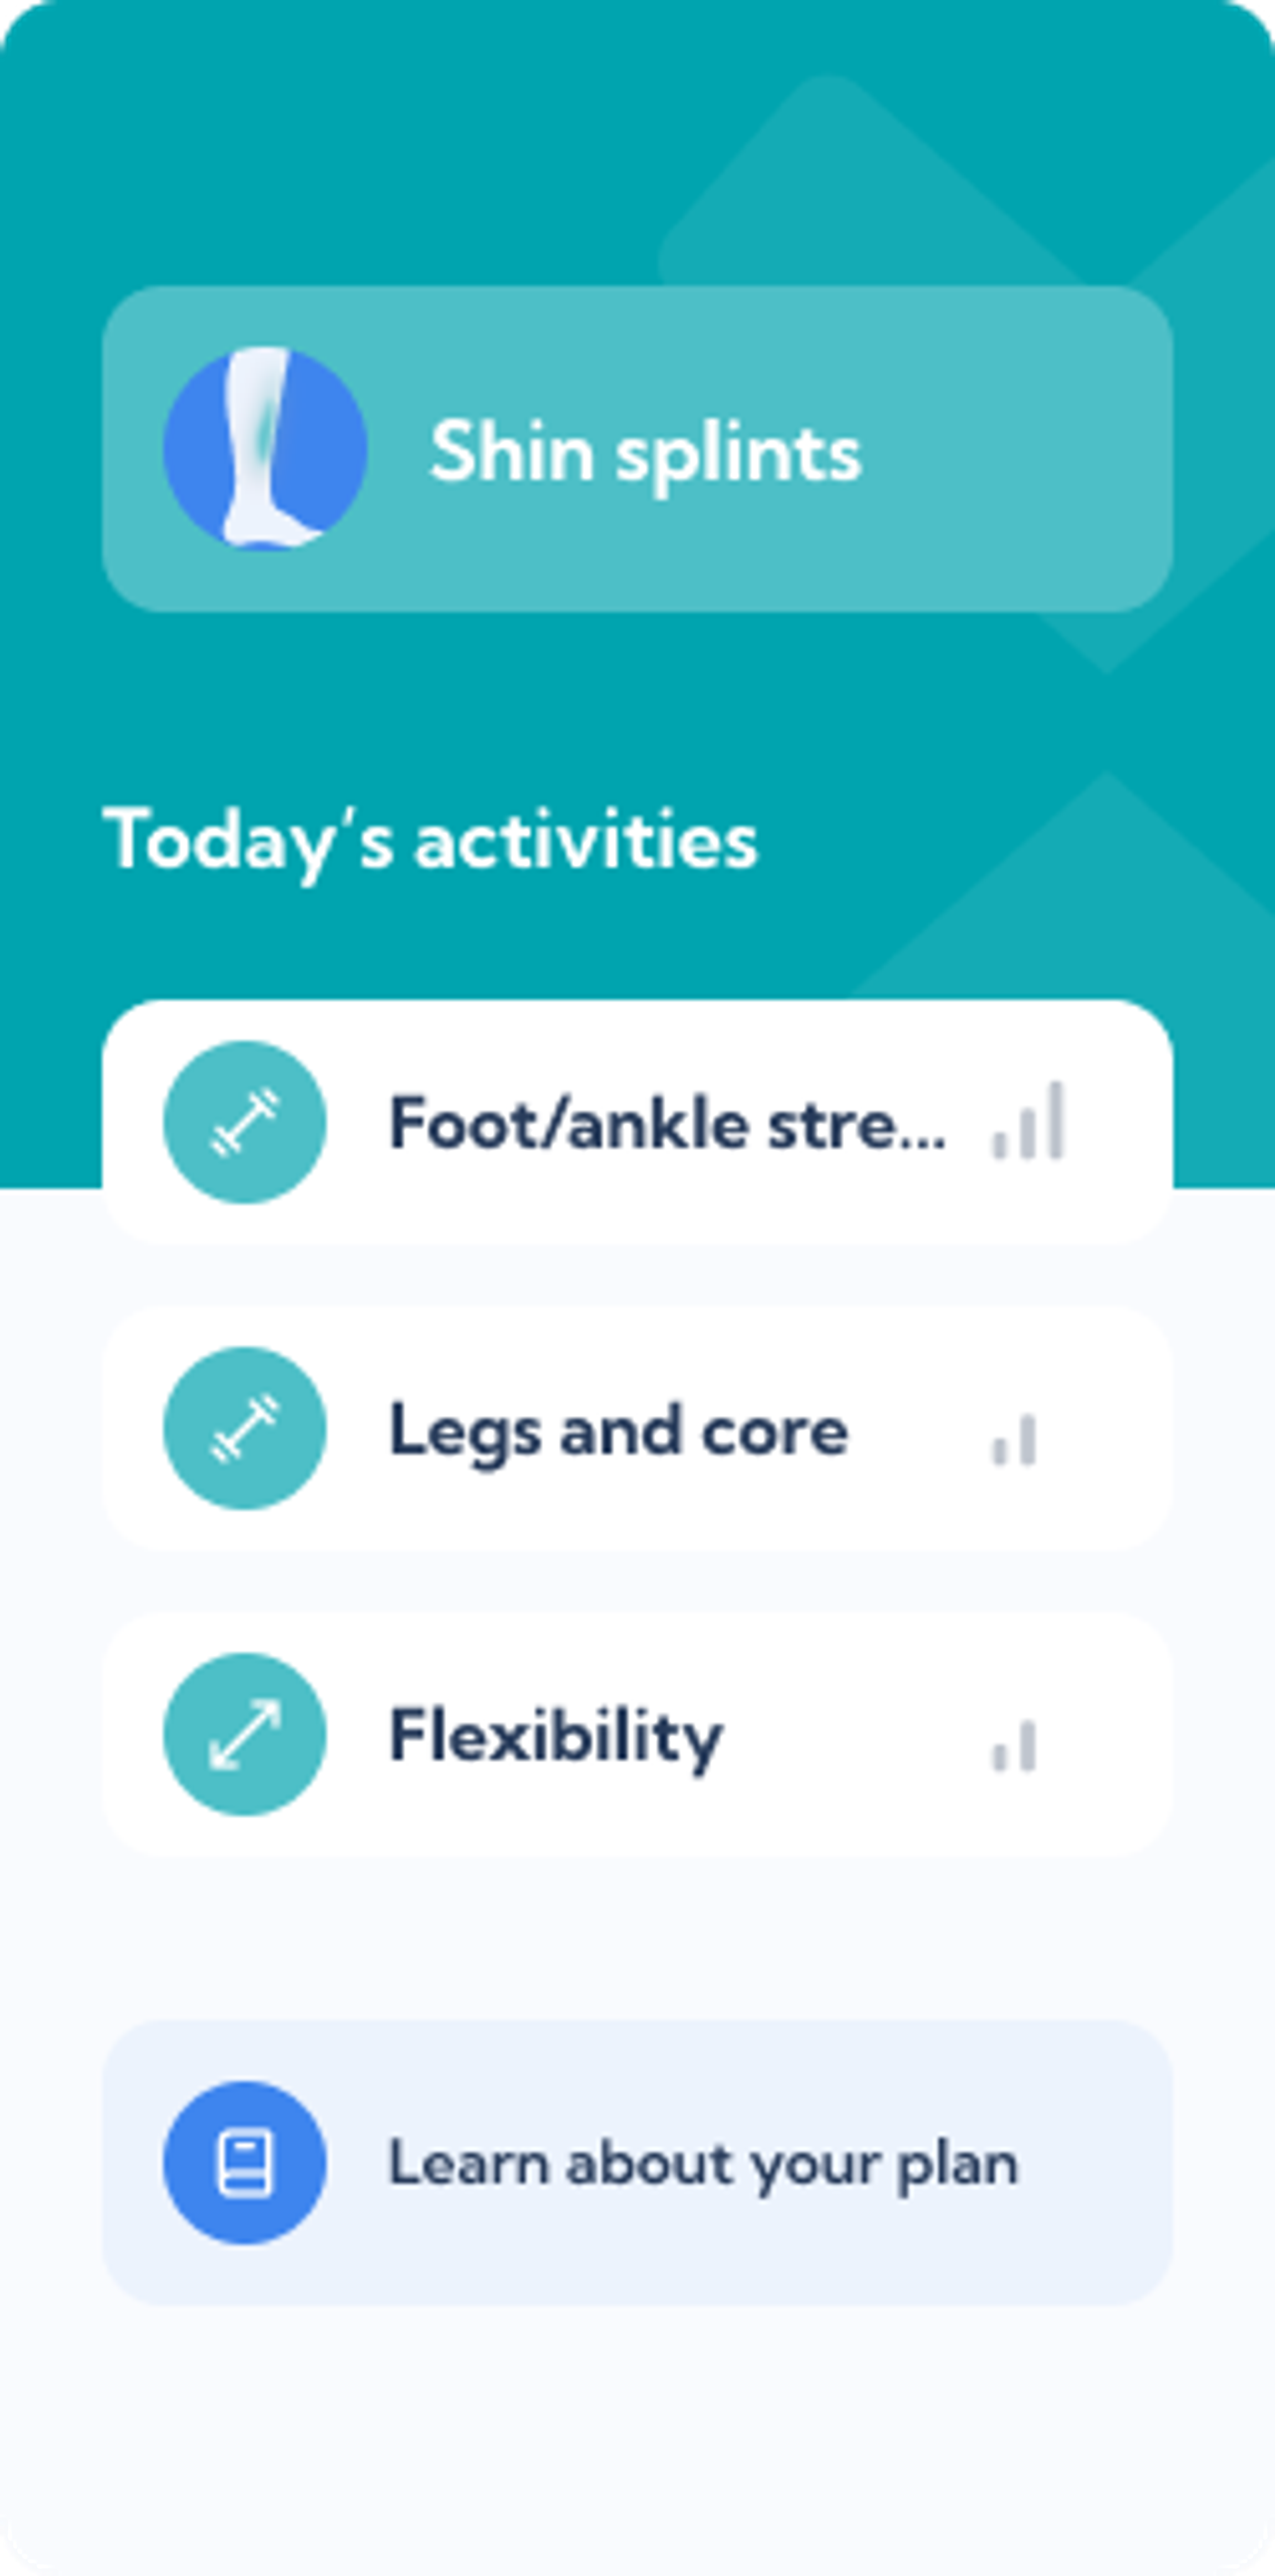 Shin splints rehab plan – Dashboard overview of the Exakt Health app